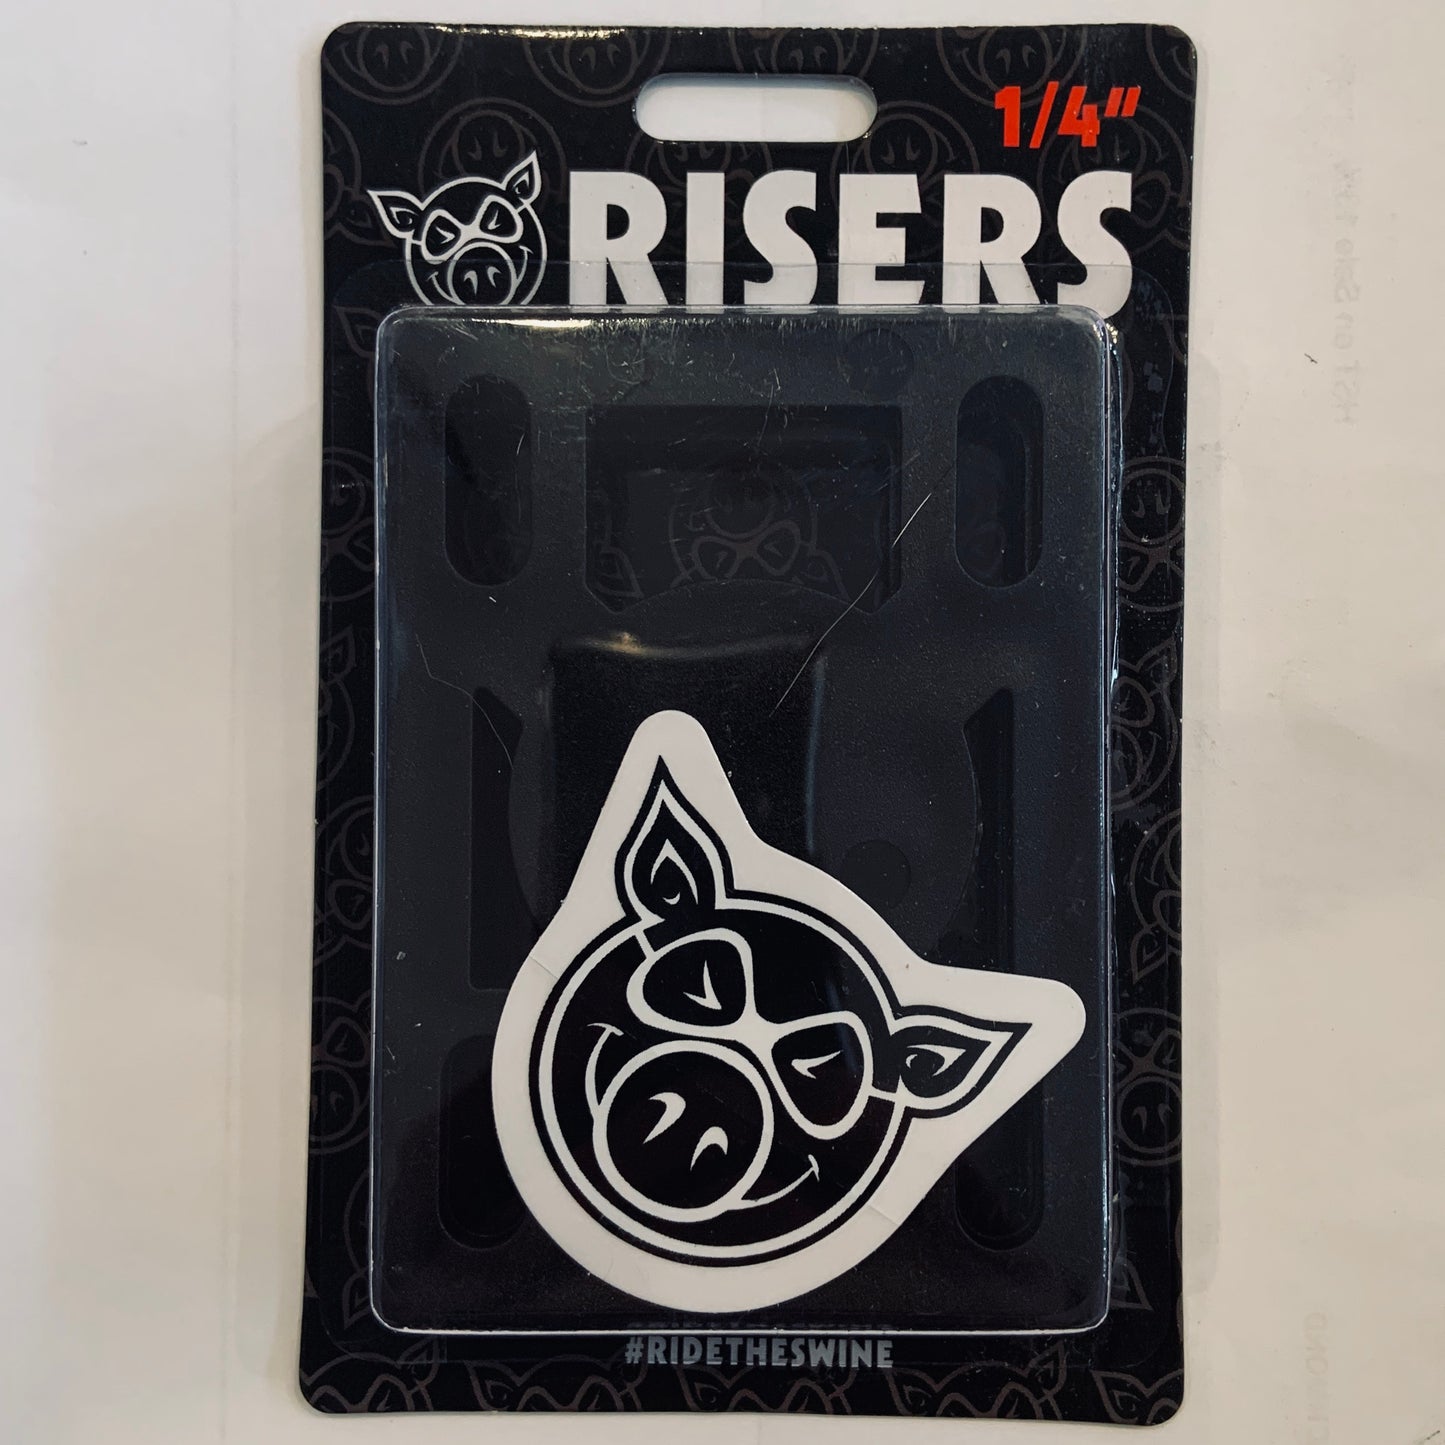 1/4” Risers Pads